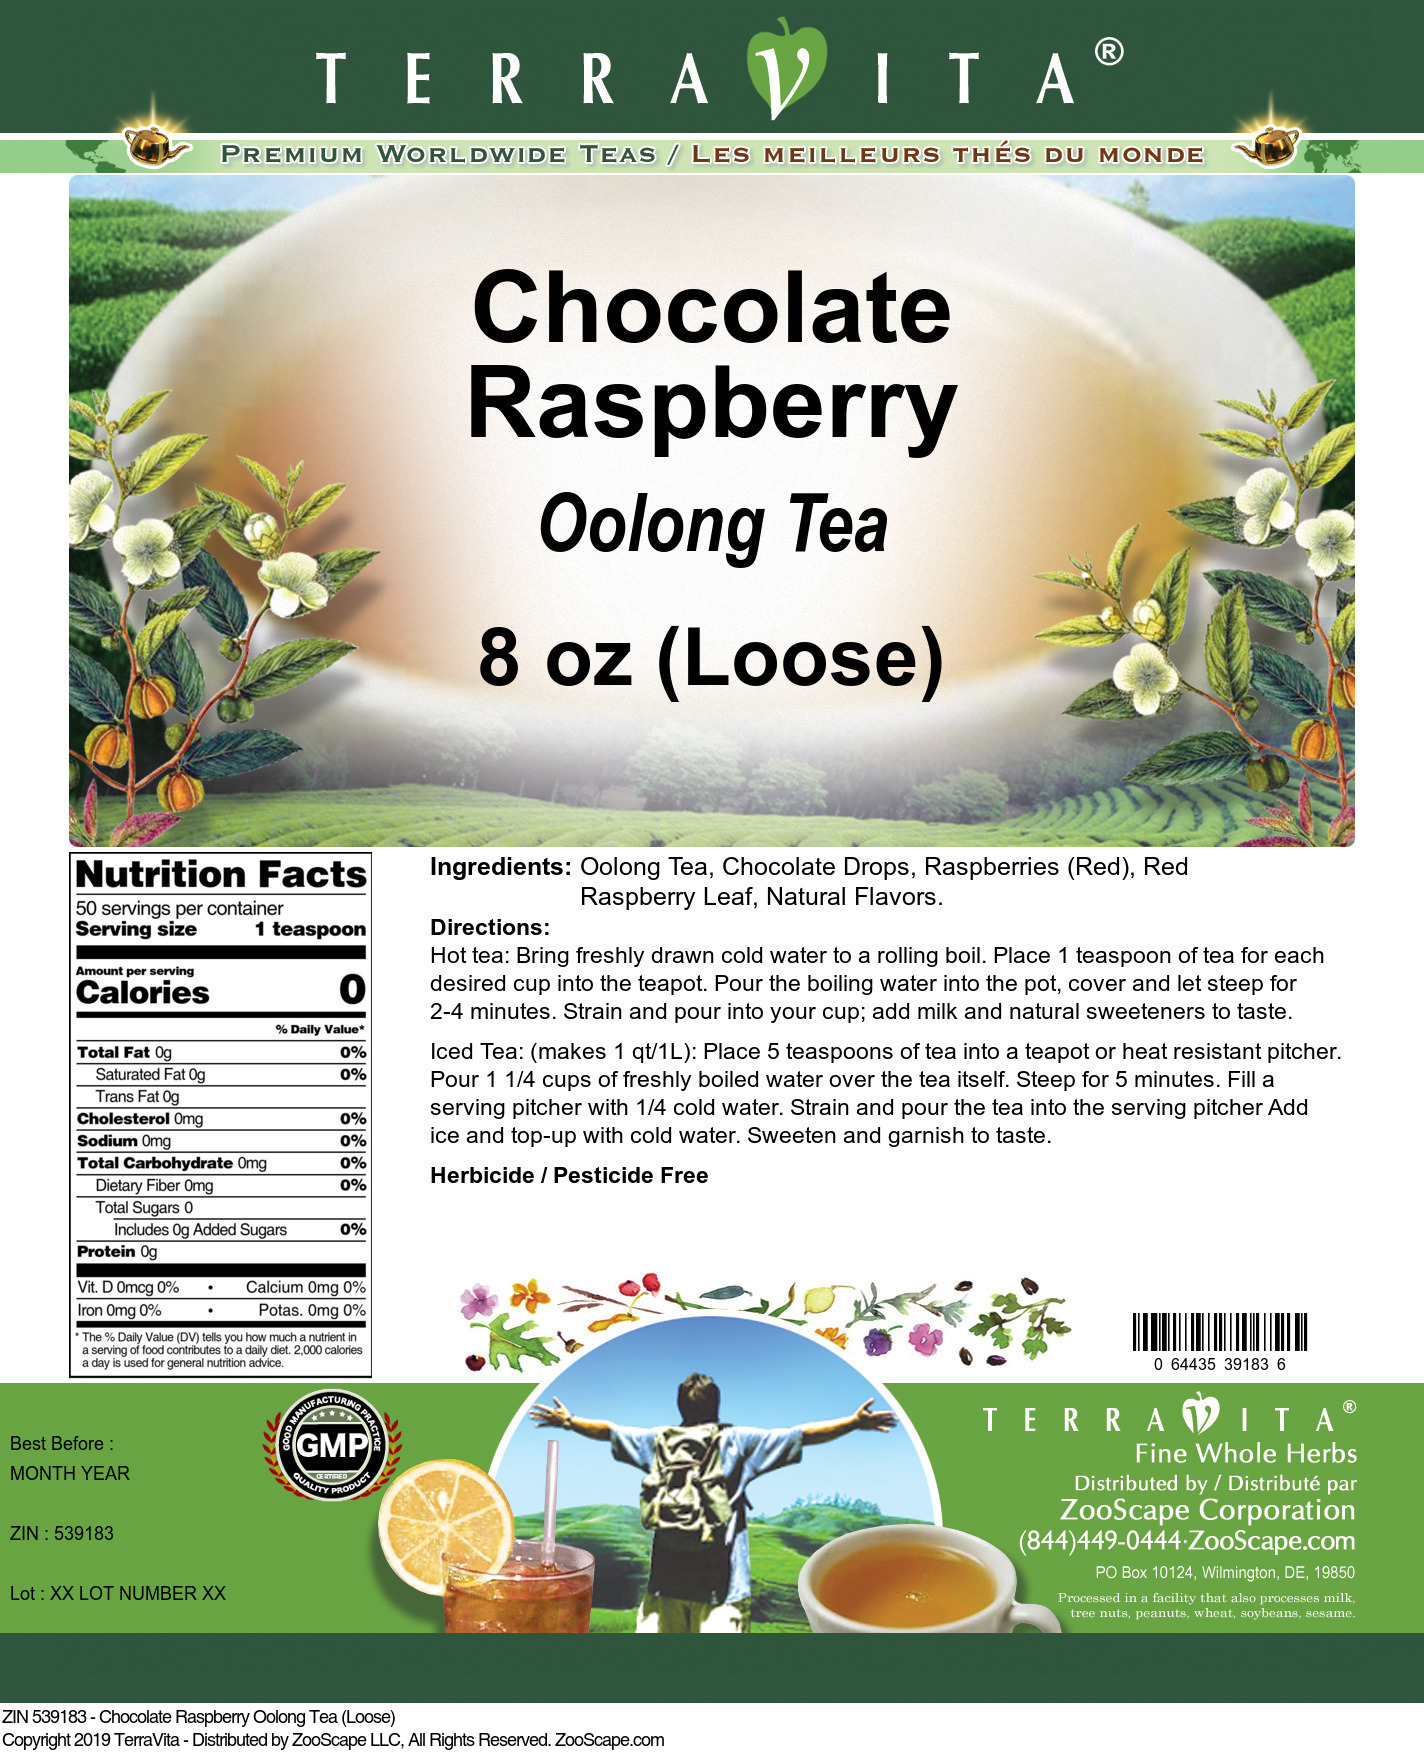 Chocolate Raspberry Oolong Tea (Loose) - Label